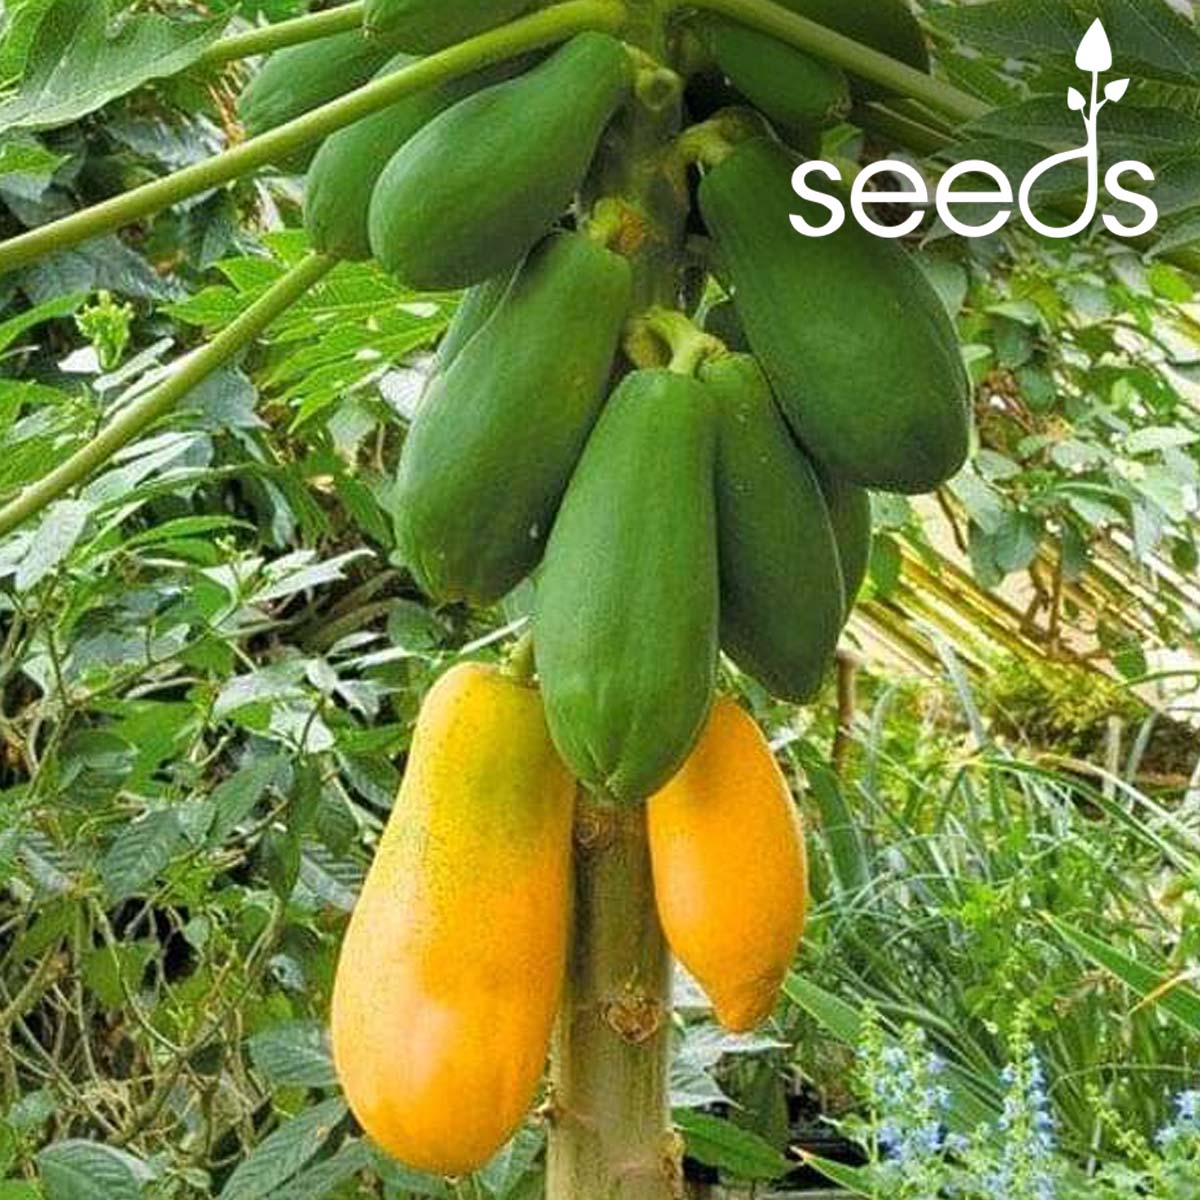 Papaya F1 Hybrid- 10 Seeds